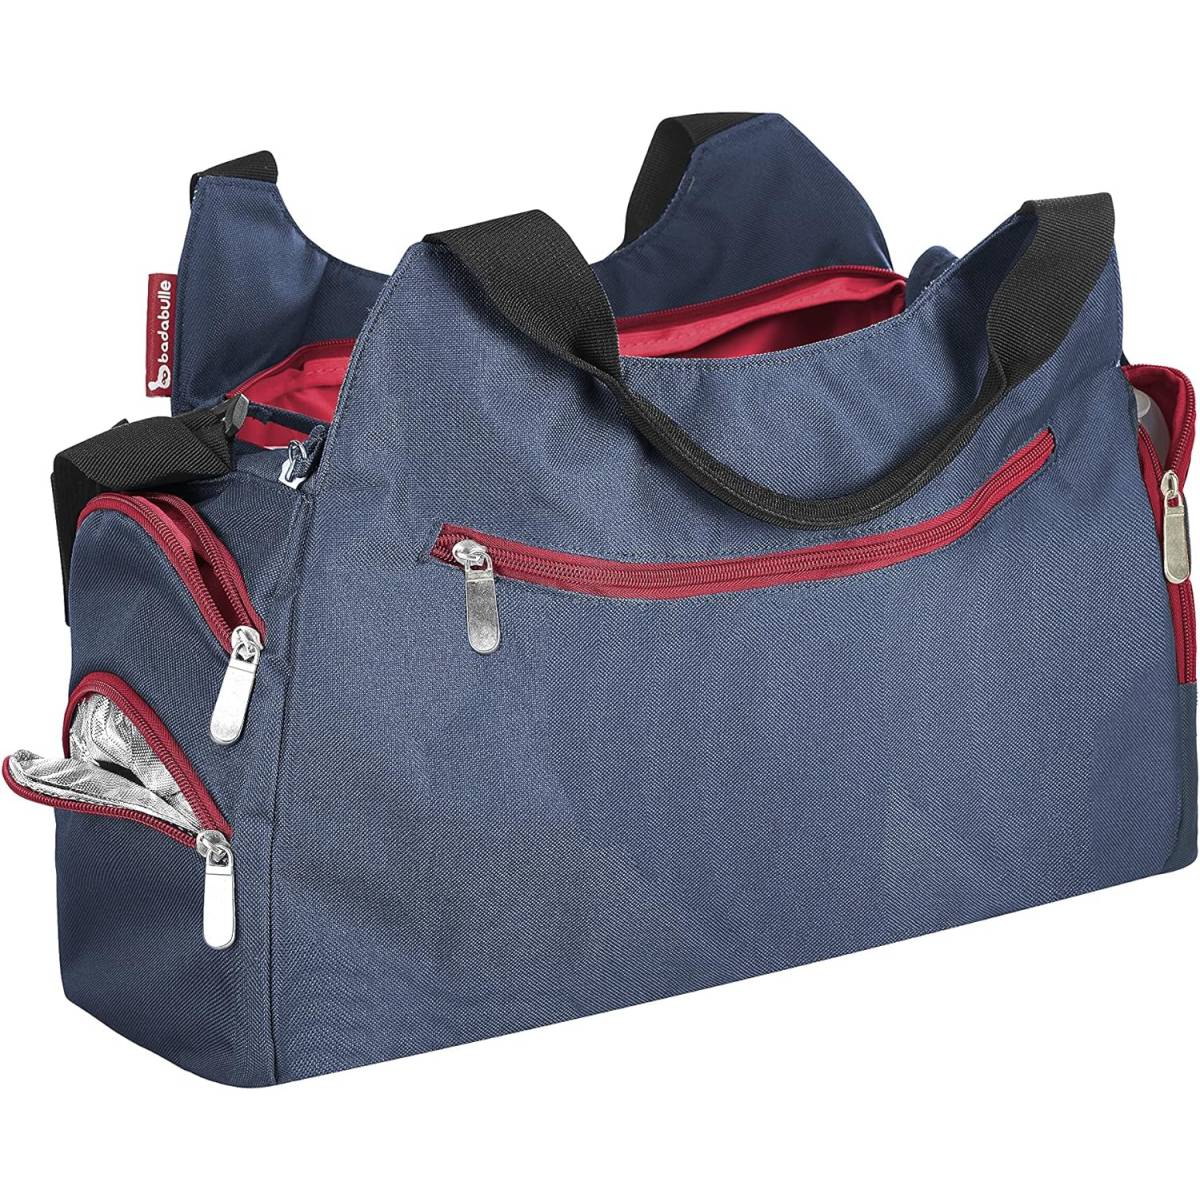 Badabulle' sac à langer grande capacité - gris/turquoise - Kiabi